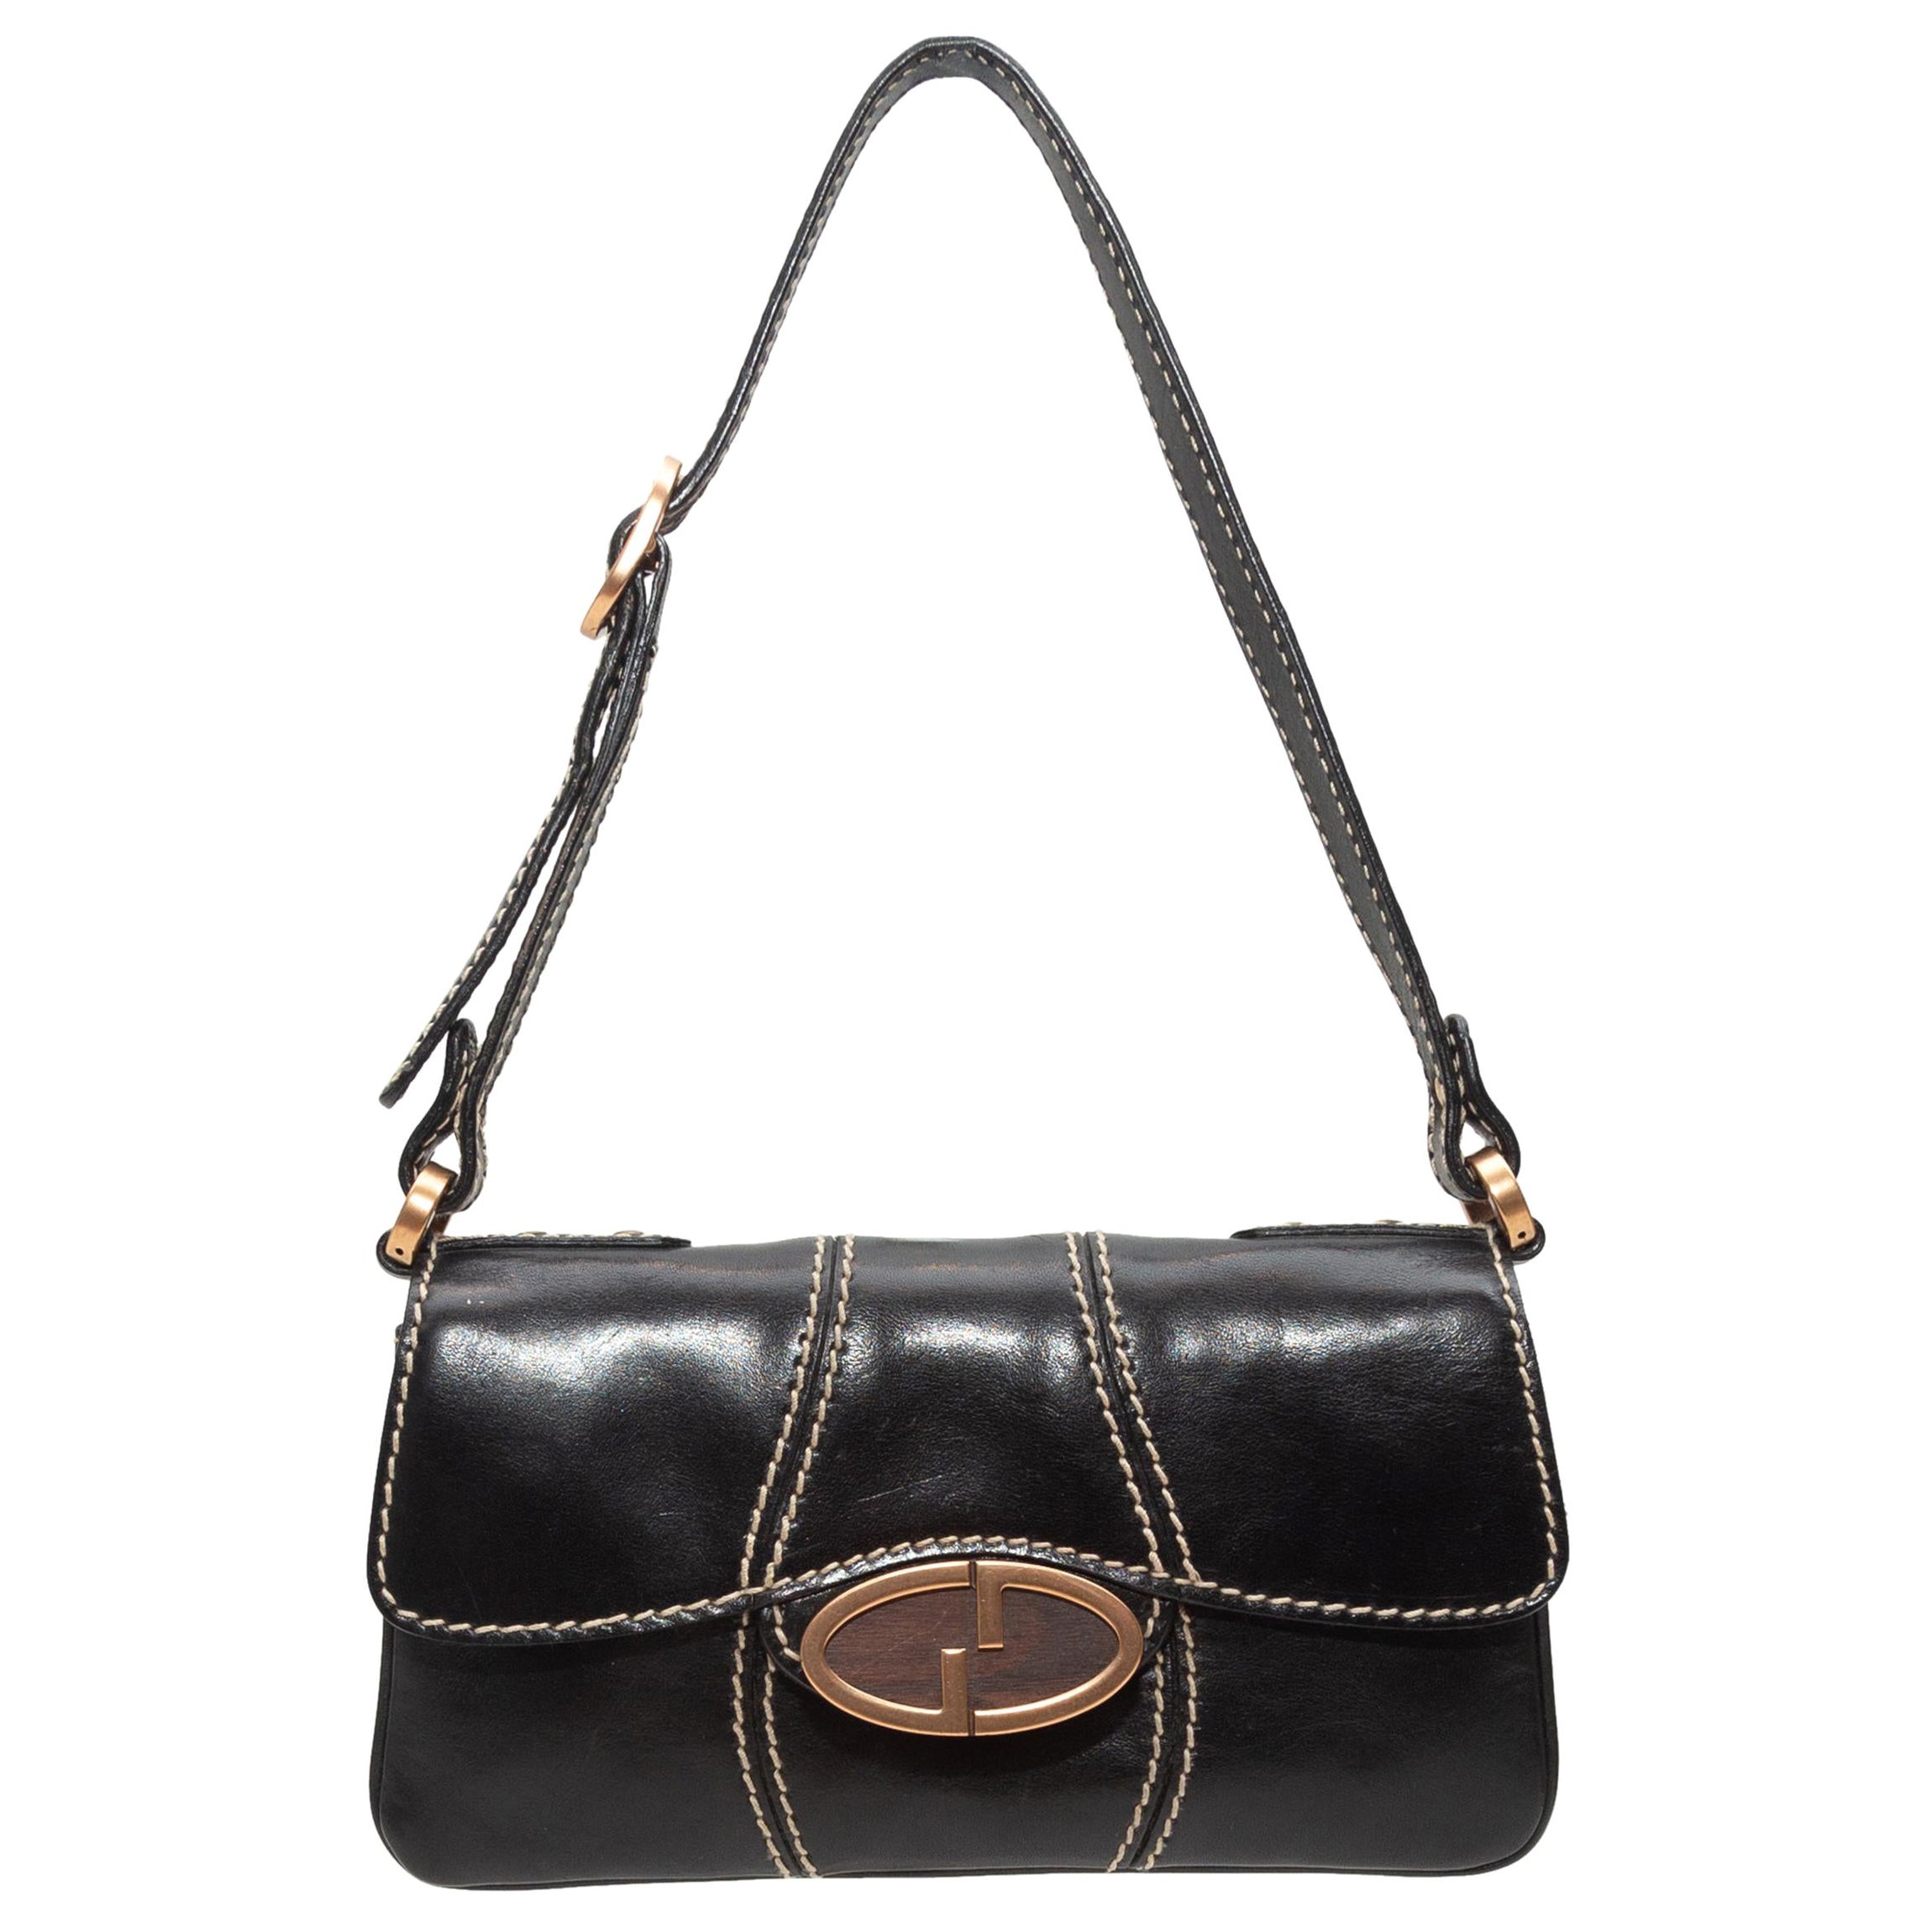 Gucci Black Mini Leather Shoulder Bag